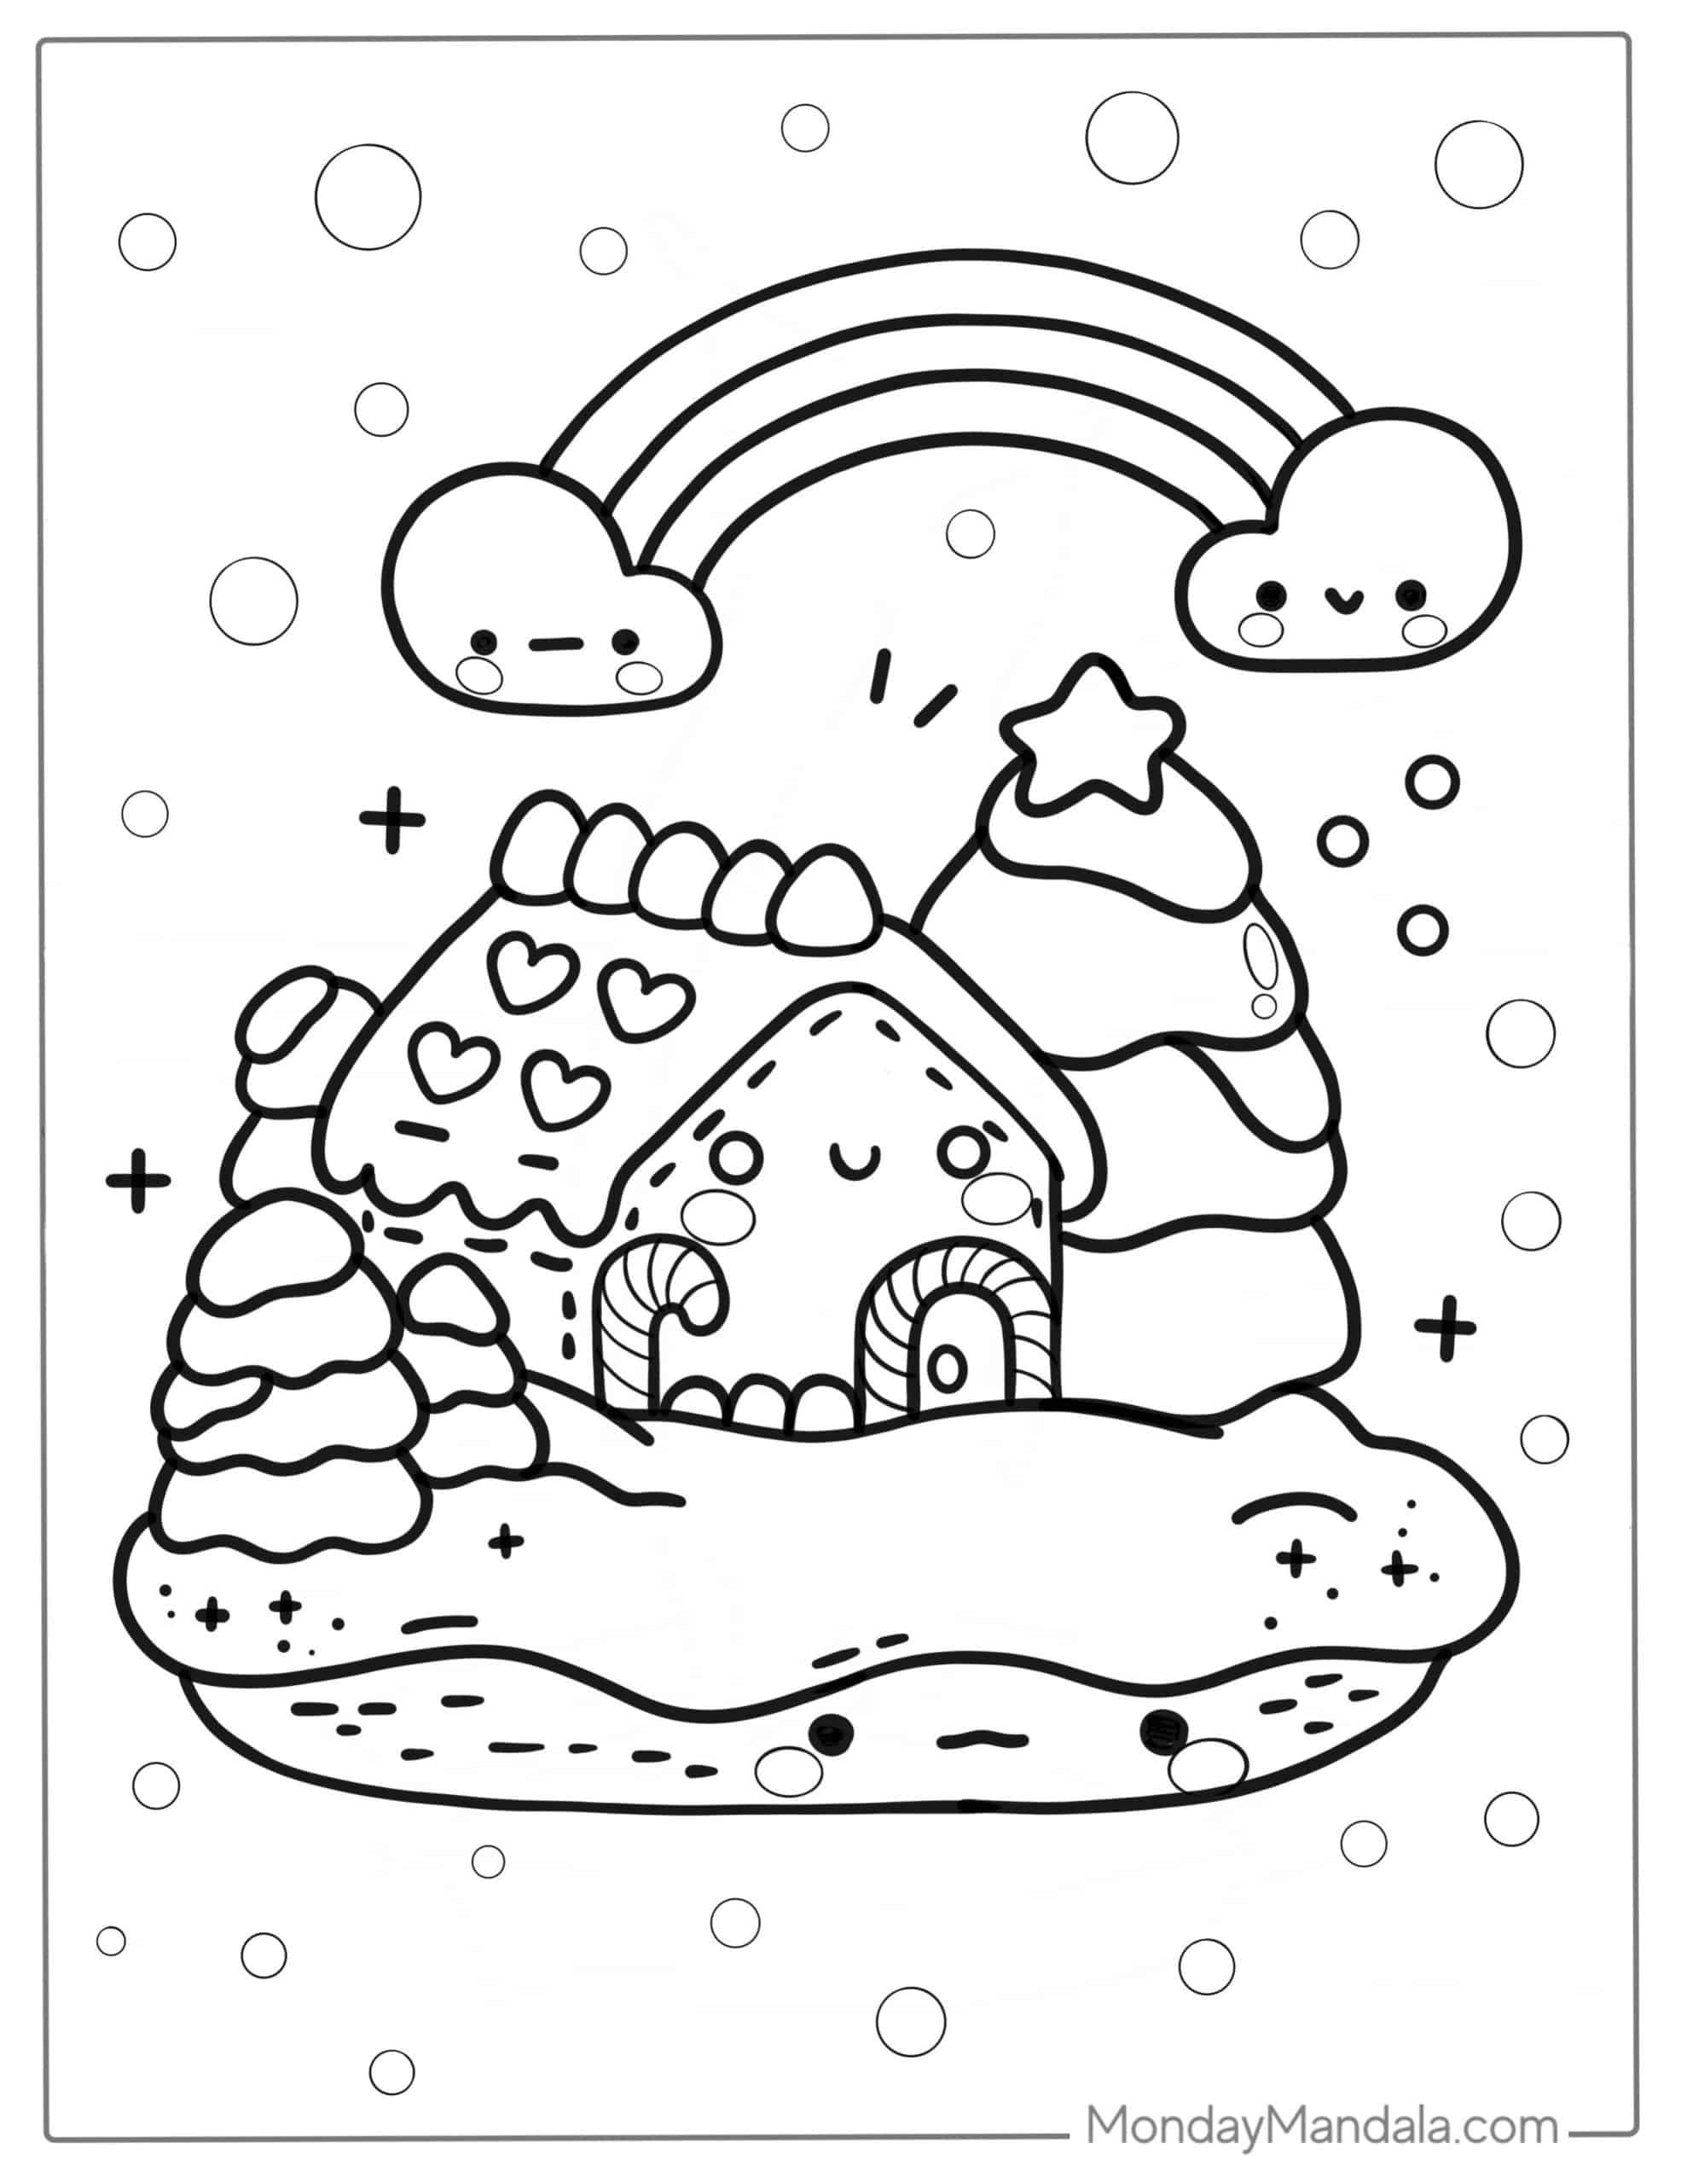 Kawaii coloring pages free pdf printables coloring pages chibi coloring pages cute coloring pages